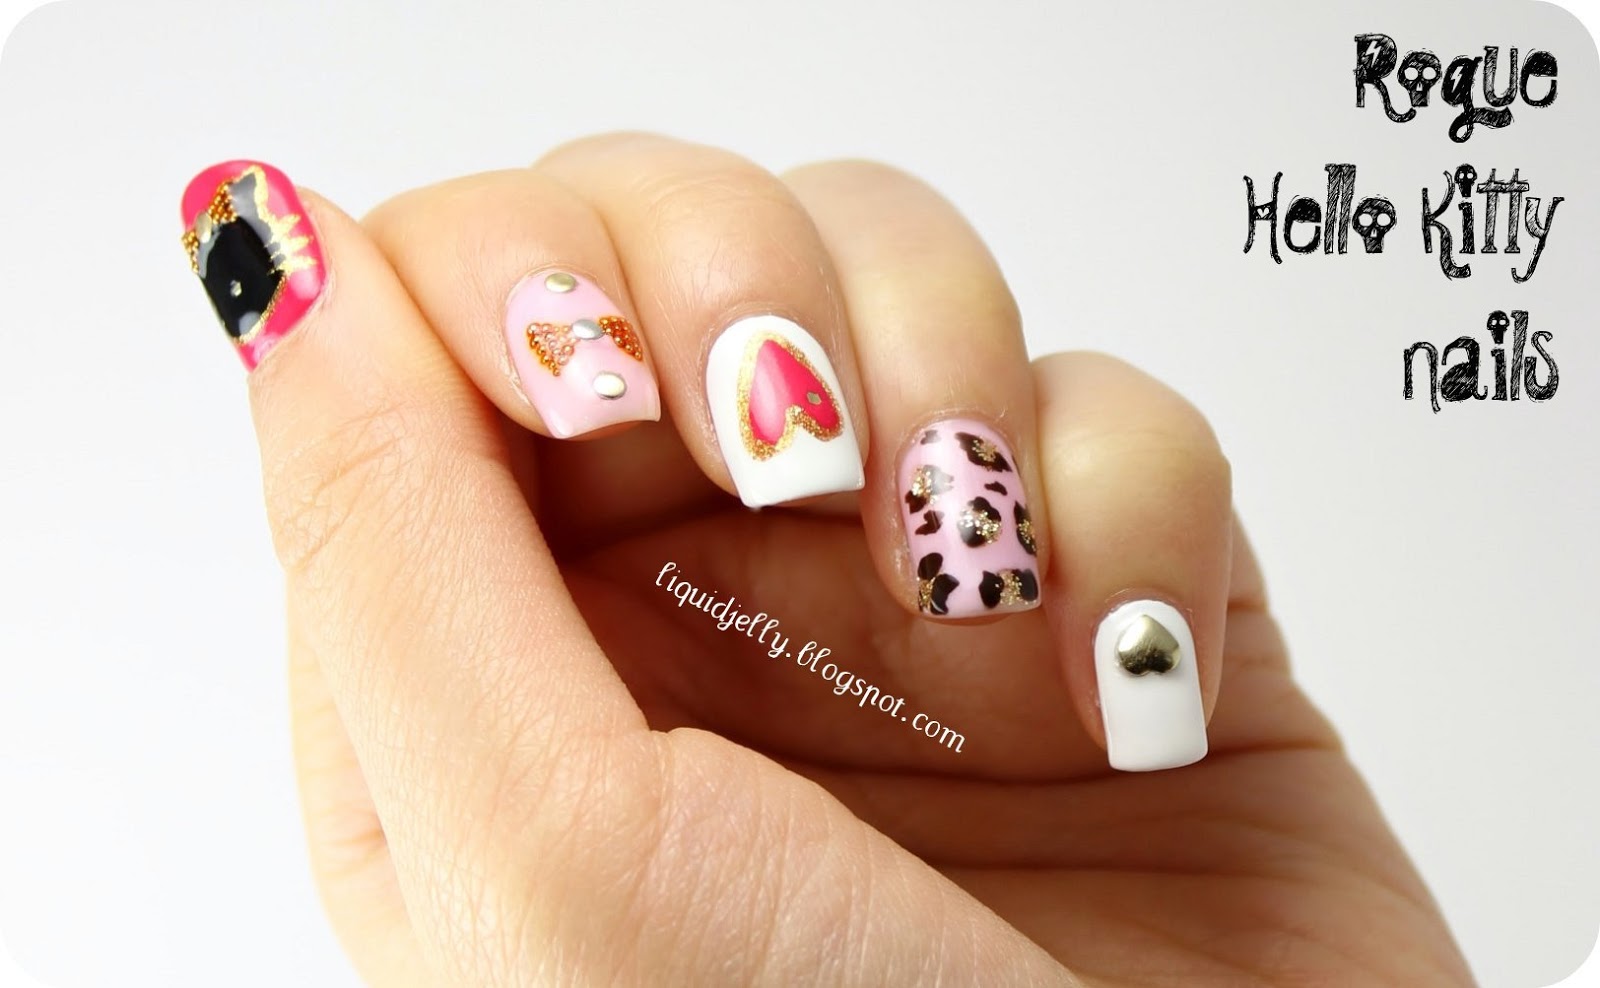 Hello Kitty Nail Art Designs - wide 7